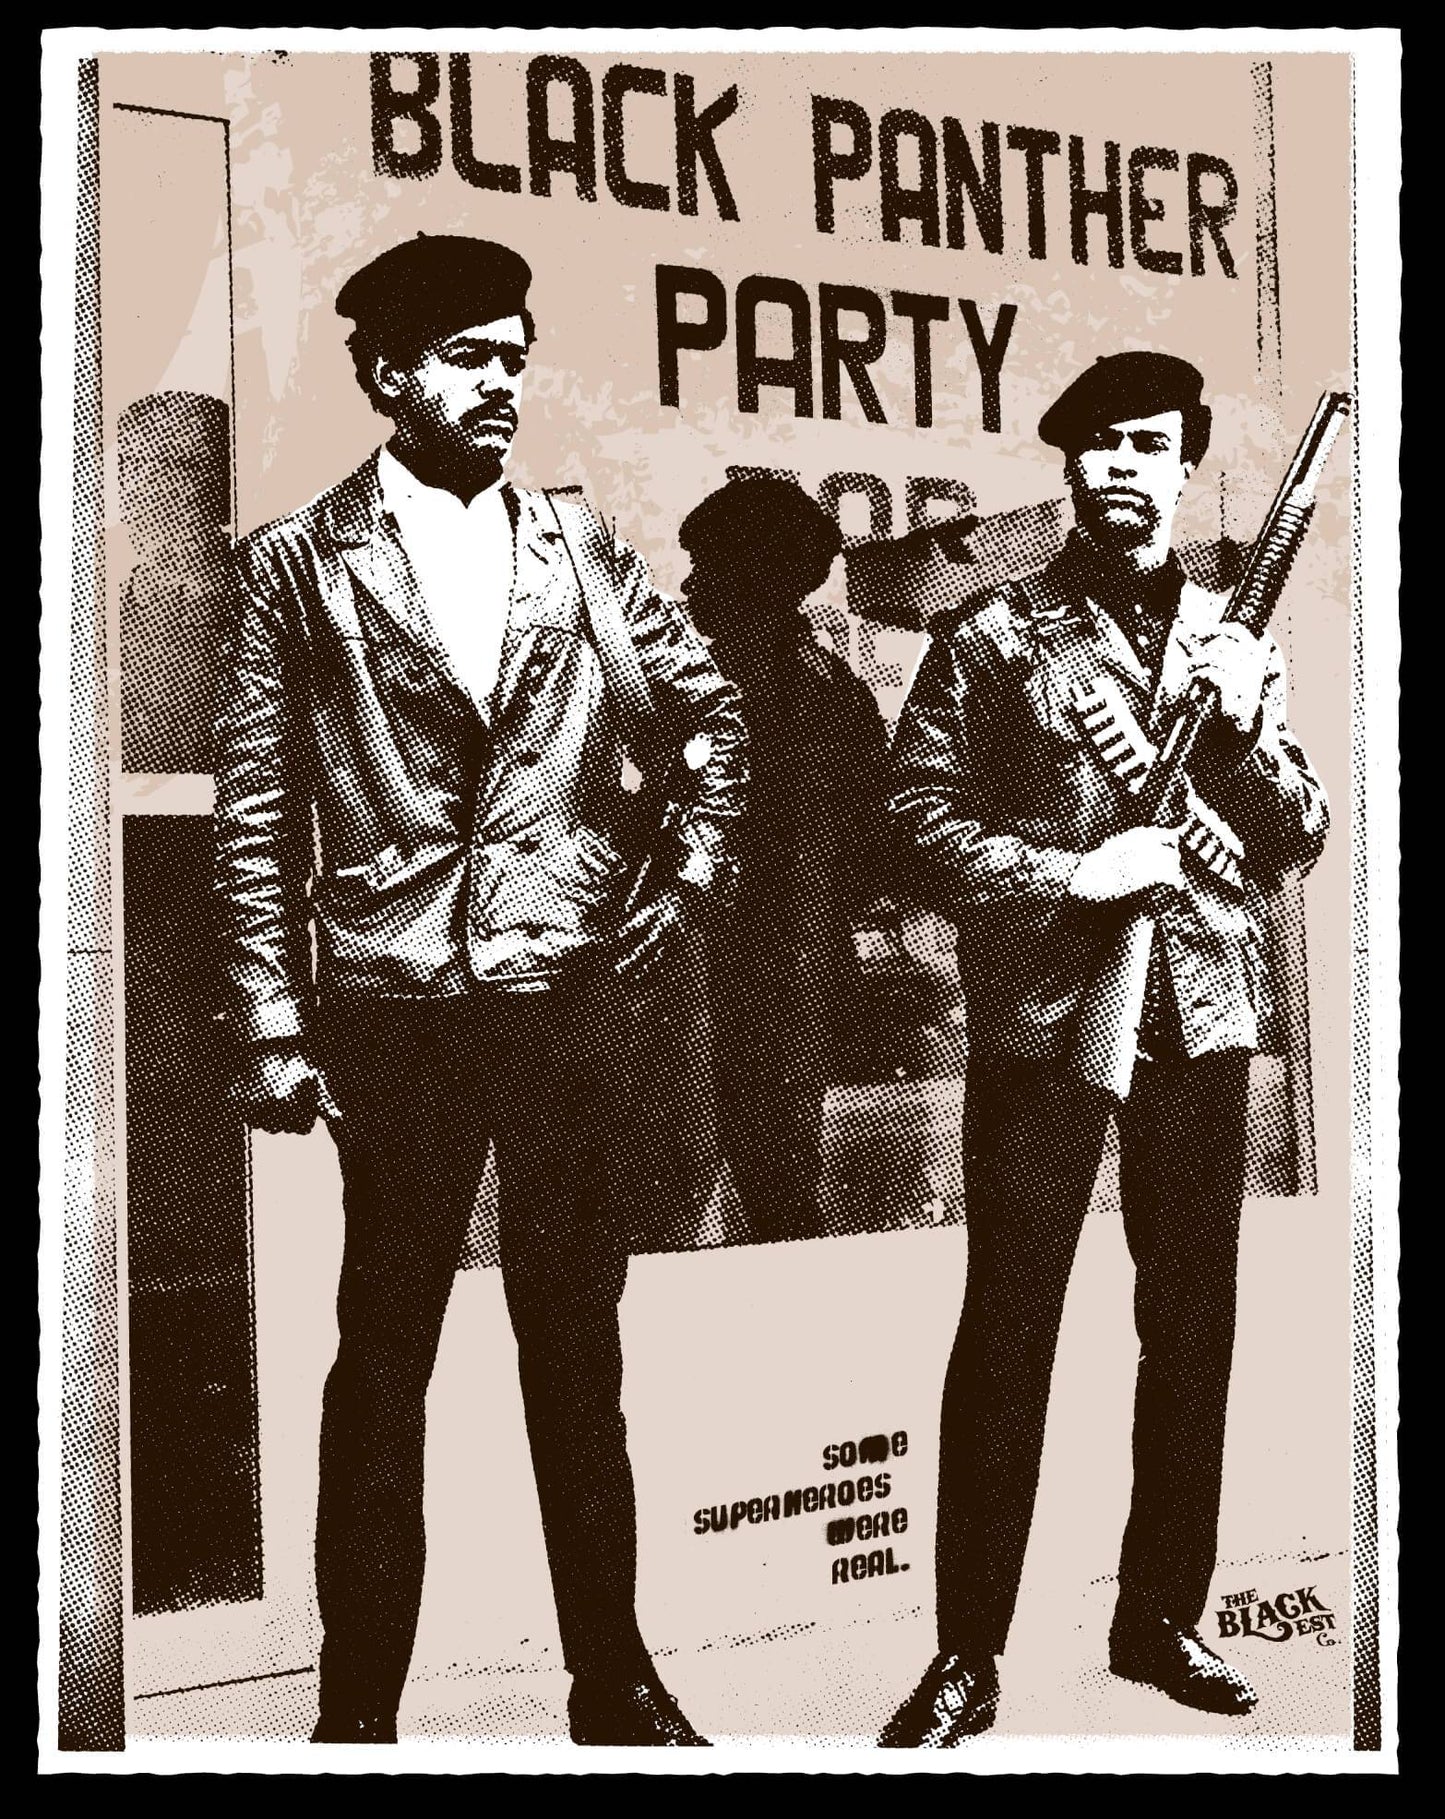 Black Panther Party Vintage Picture Unisex T-Shirt